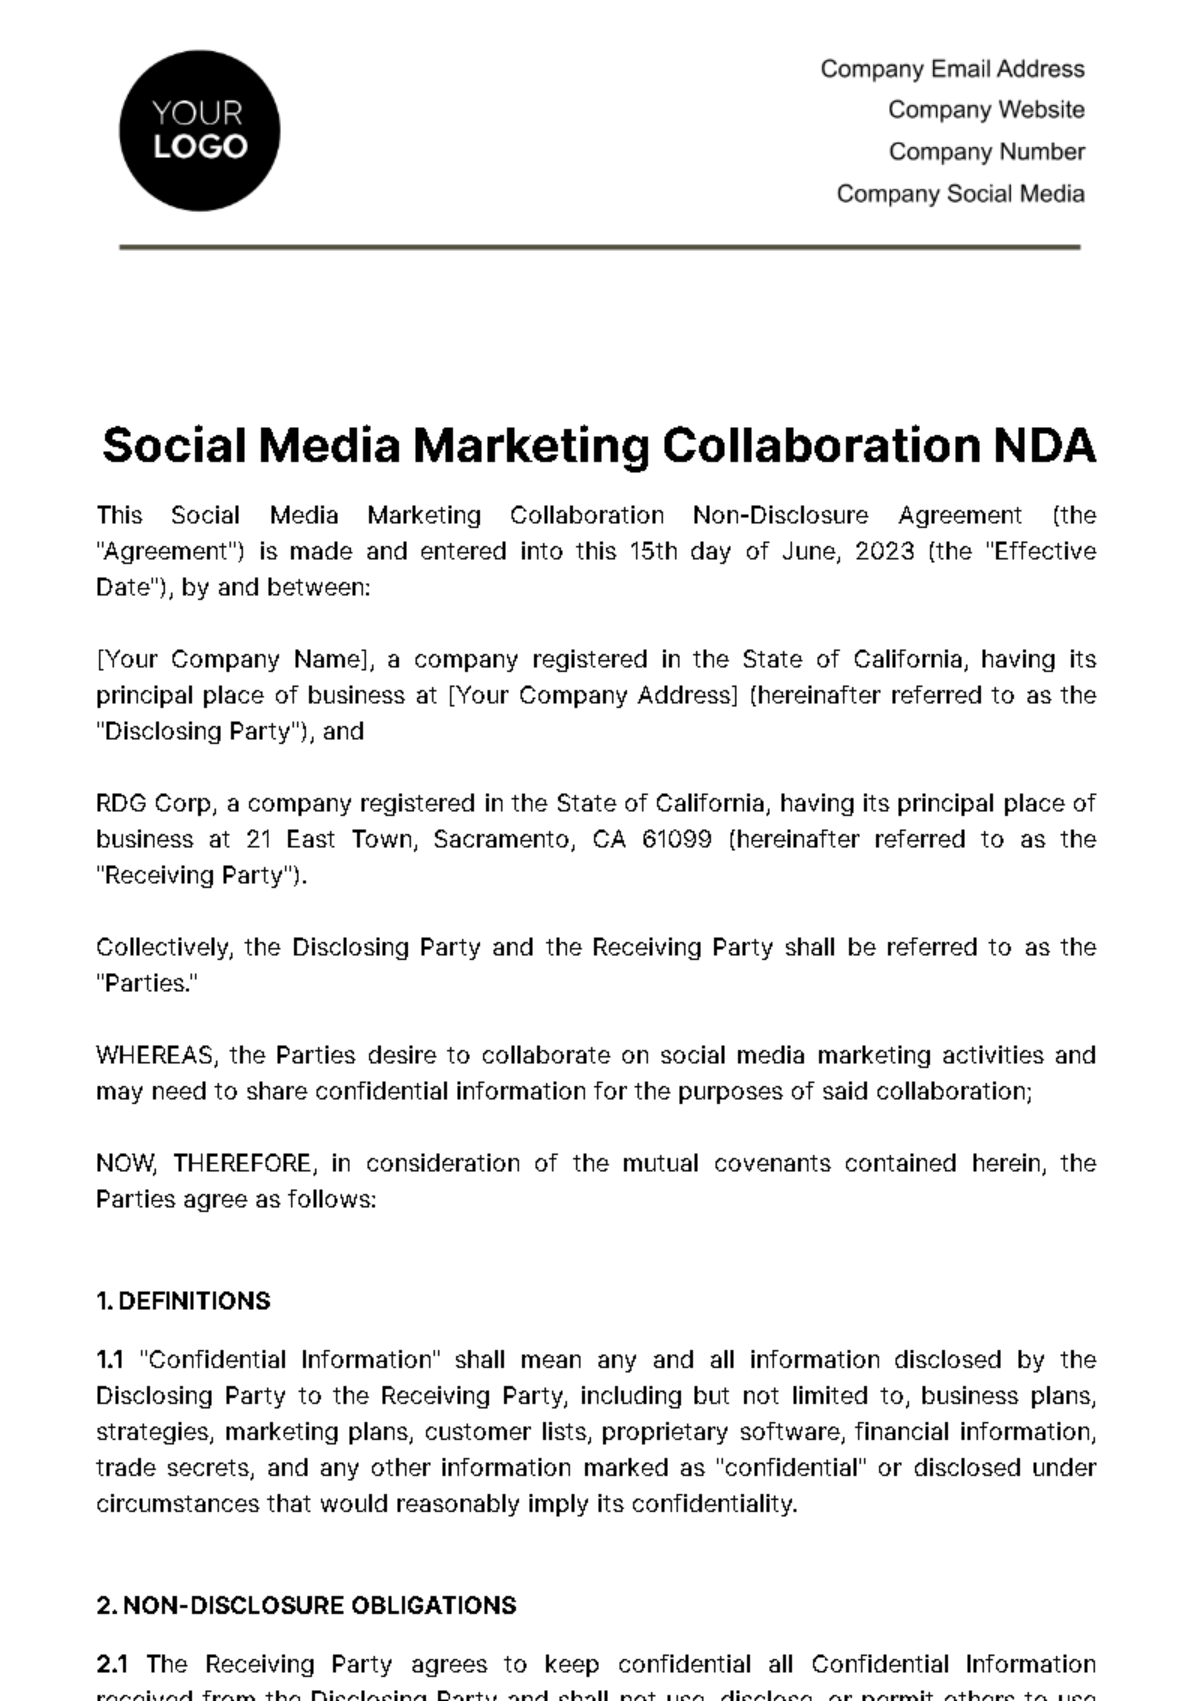 Free Social Media Marketing Collaboration NDA Template